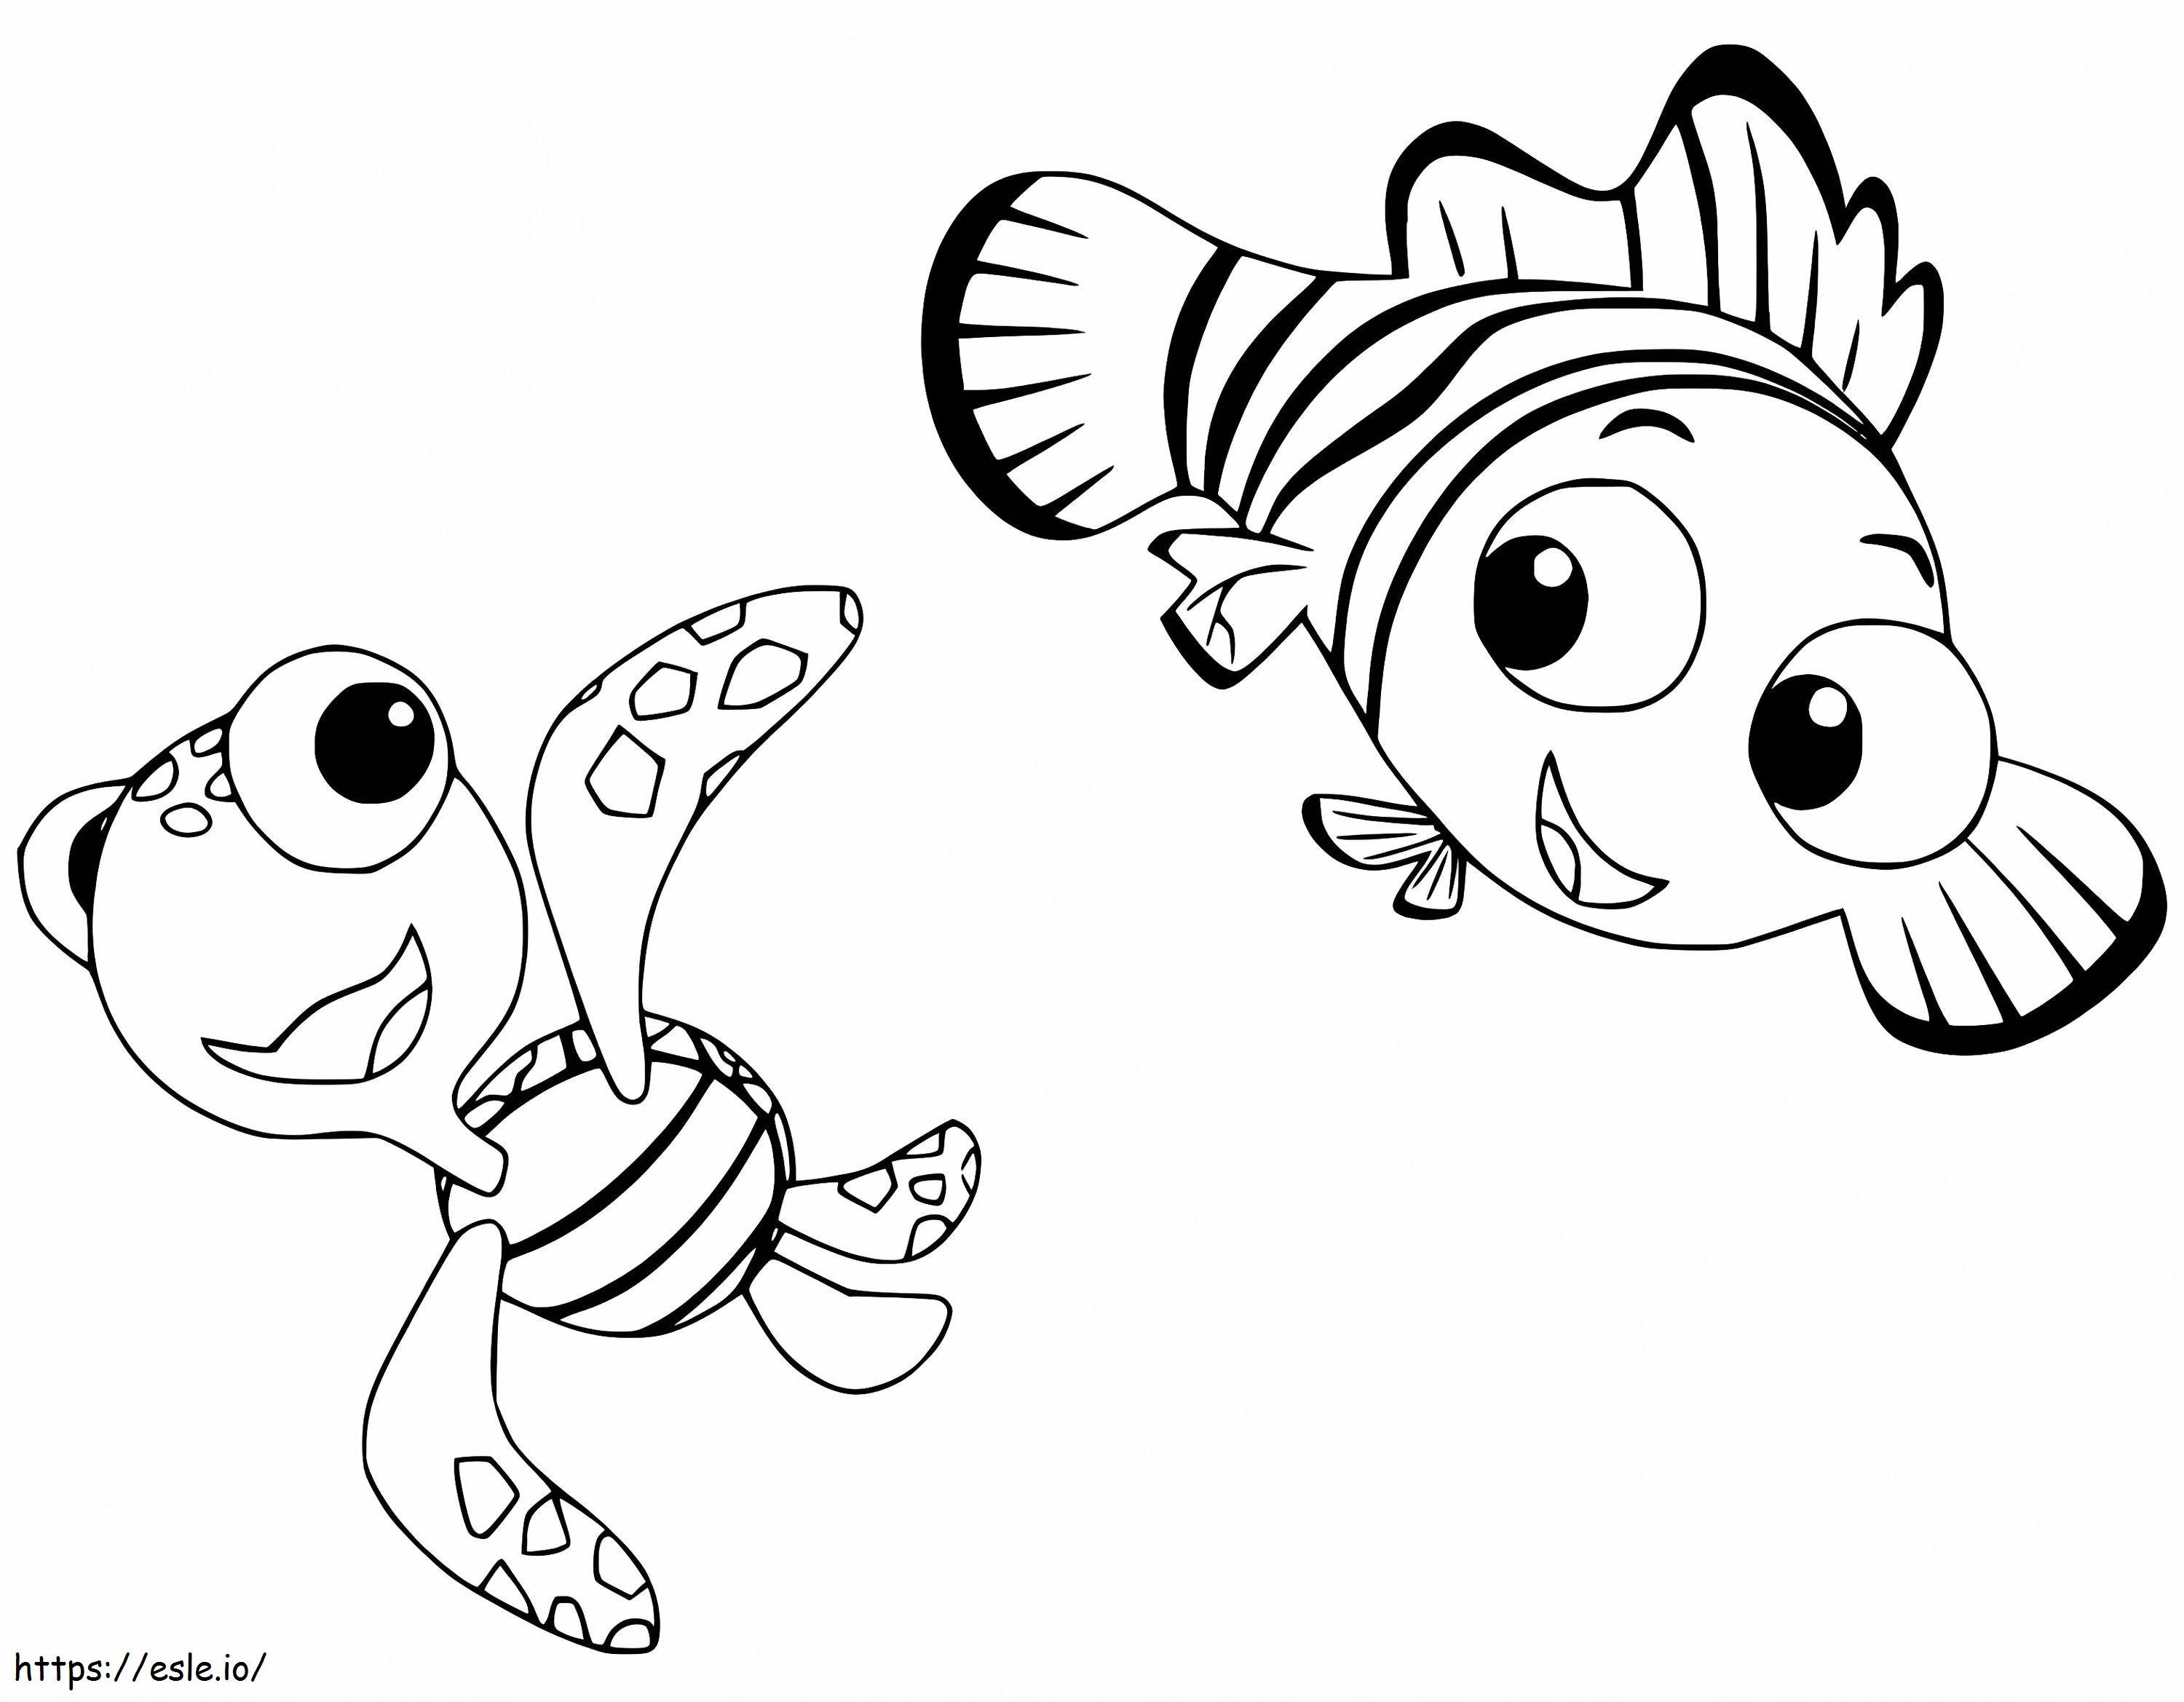 Coloriage Gicler avec Nemo à imprimer dessin